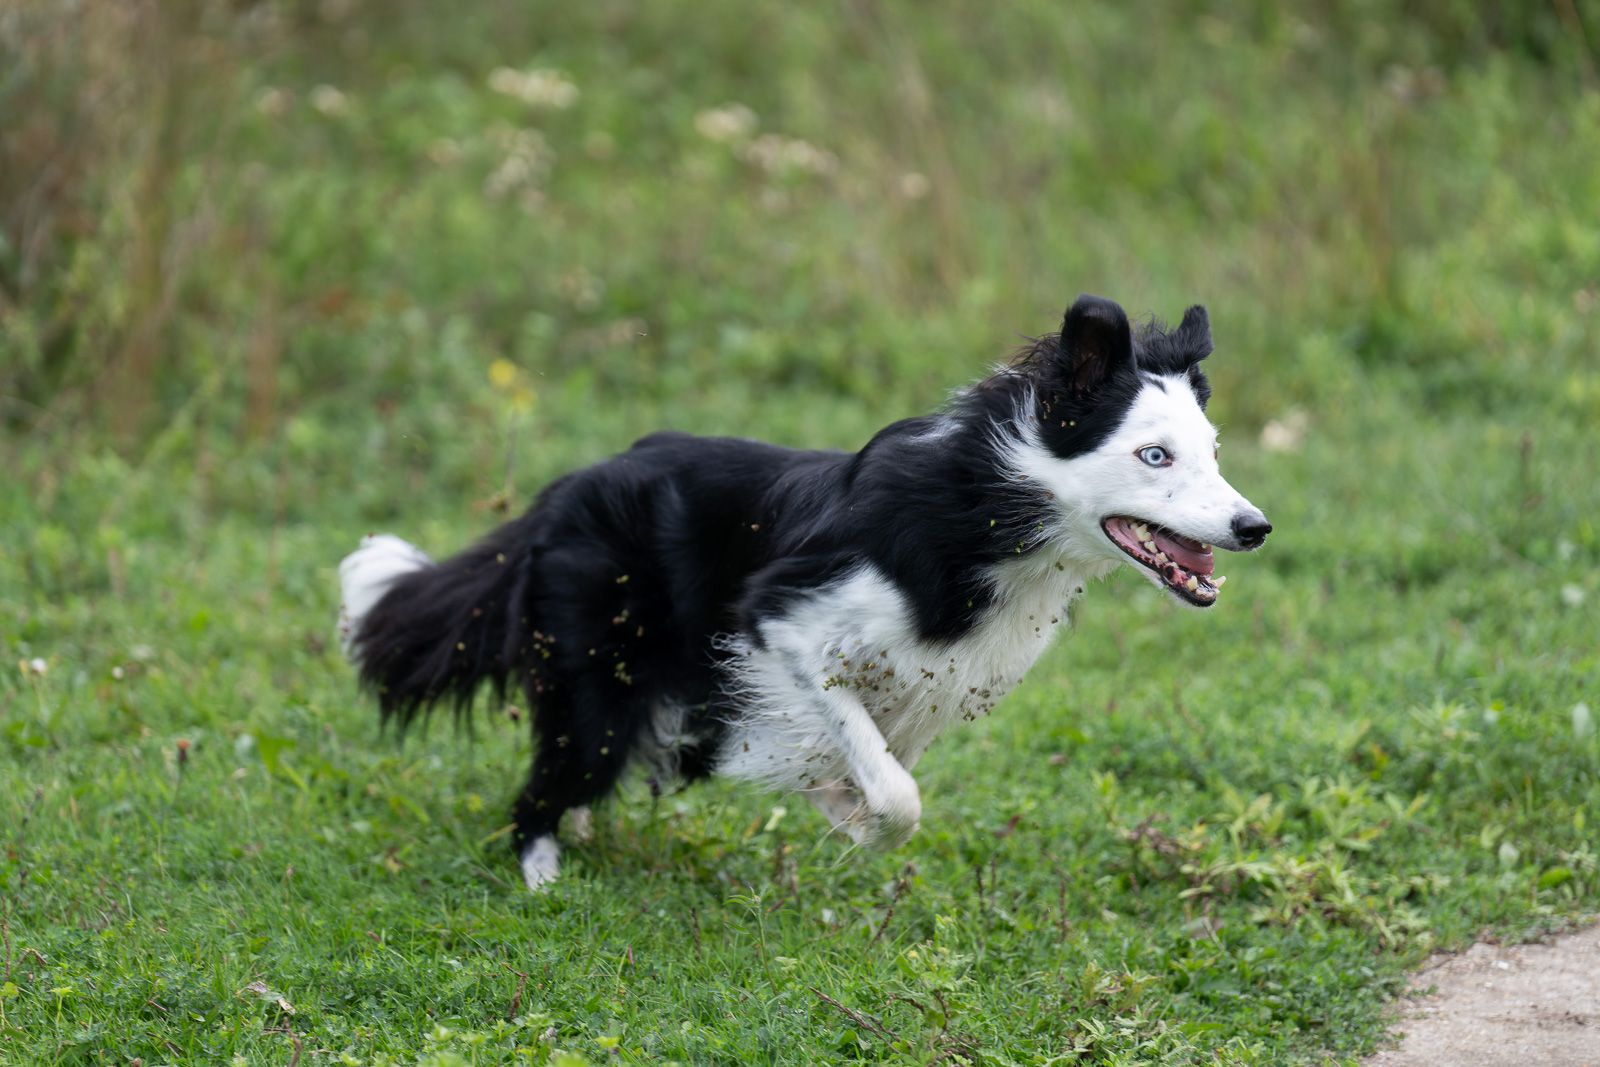 Sample running dog taken with Sony 70-200 GM II lens